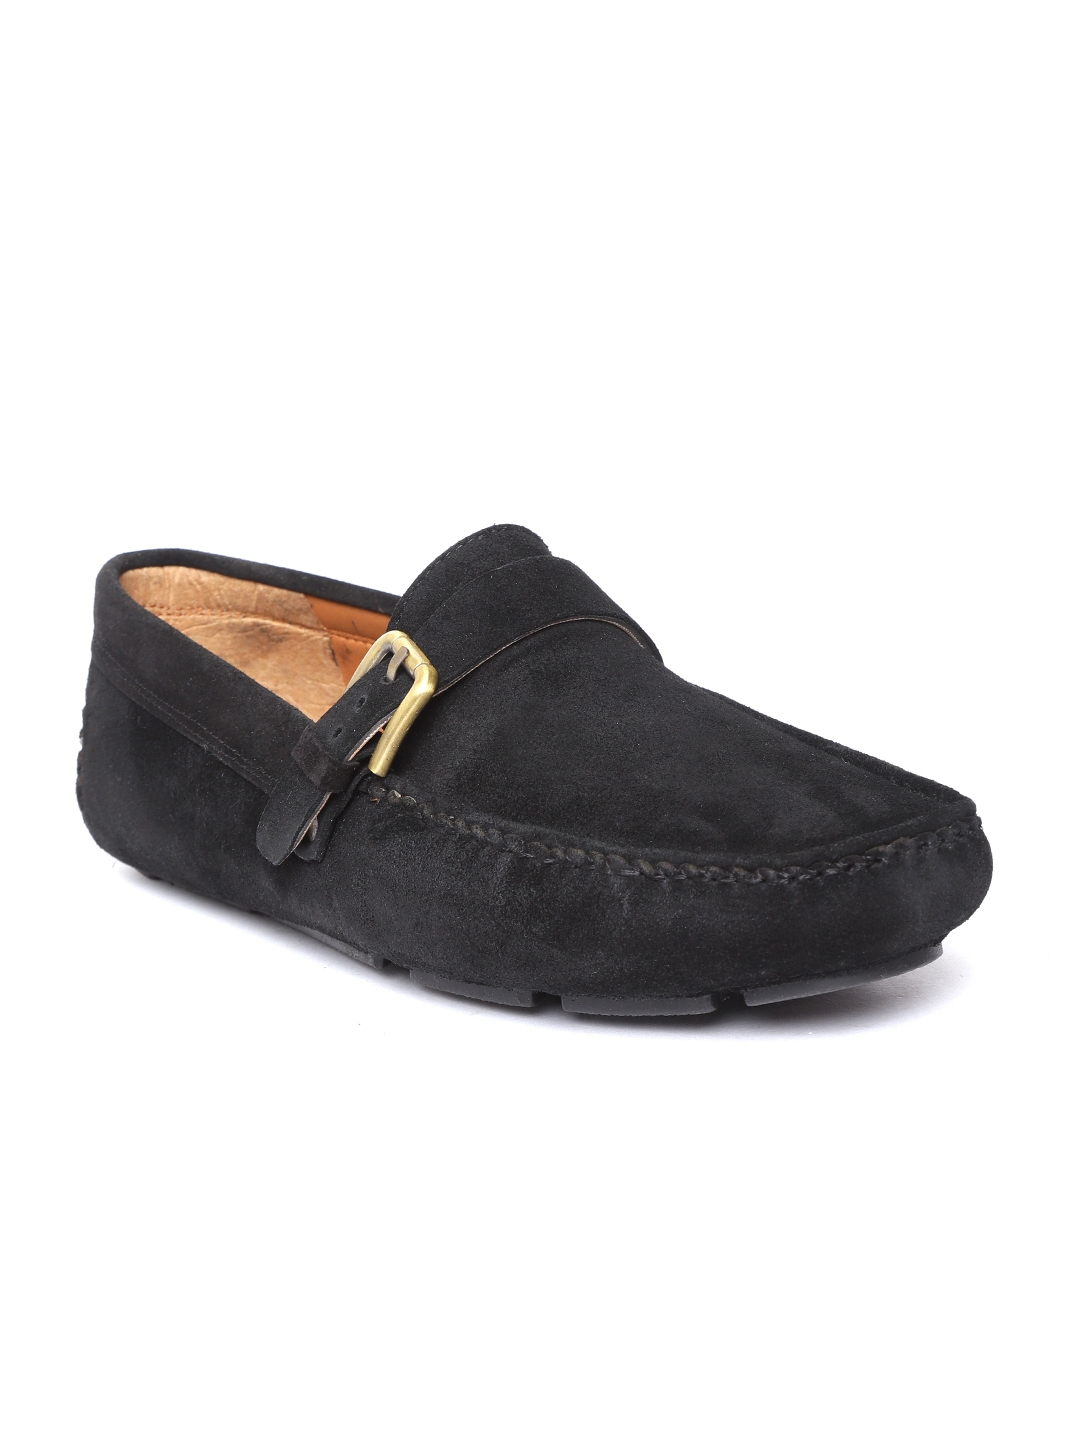 Buy Mocas Men Black Leather Driving Shoes - Casual Shoes for Men ...